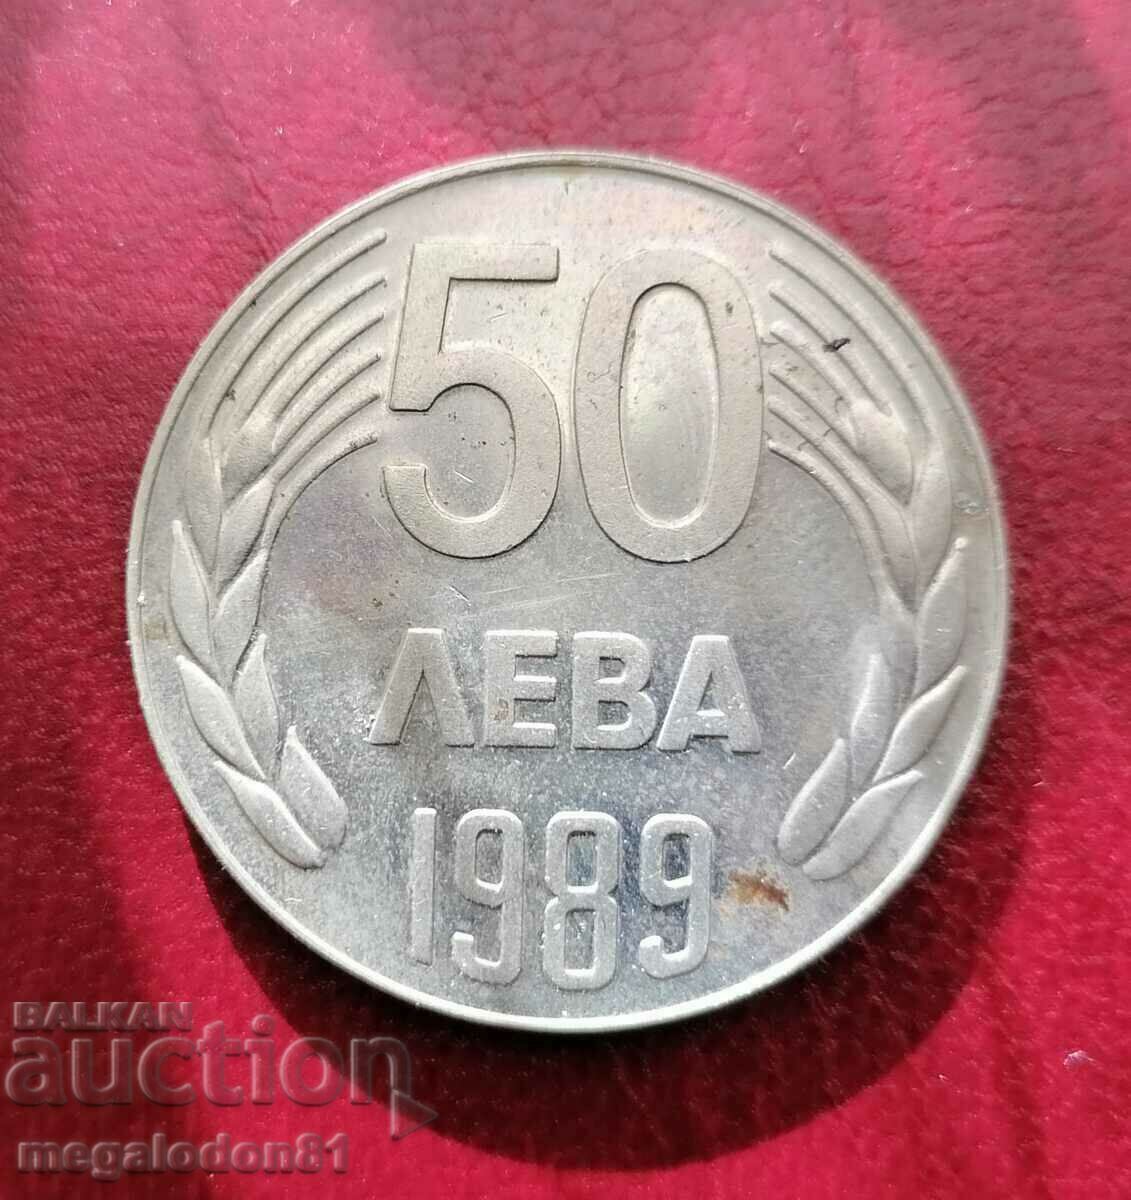 Bulgaria - BGN 50 1989